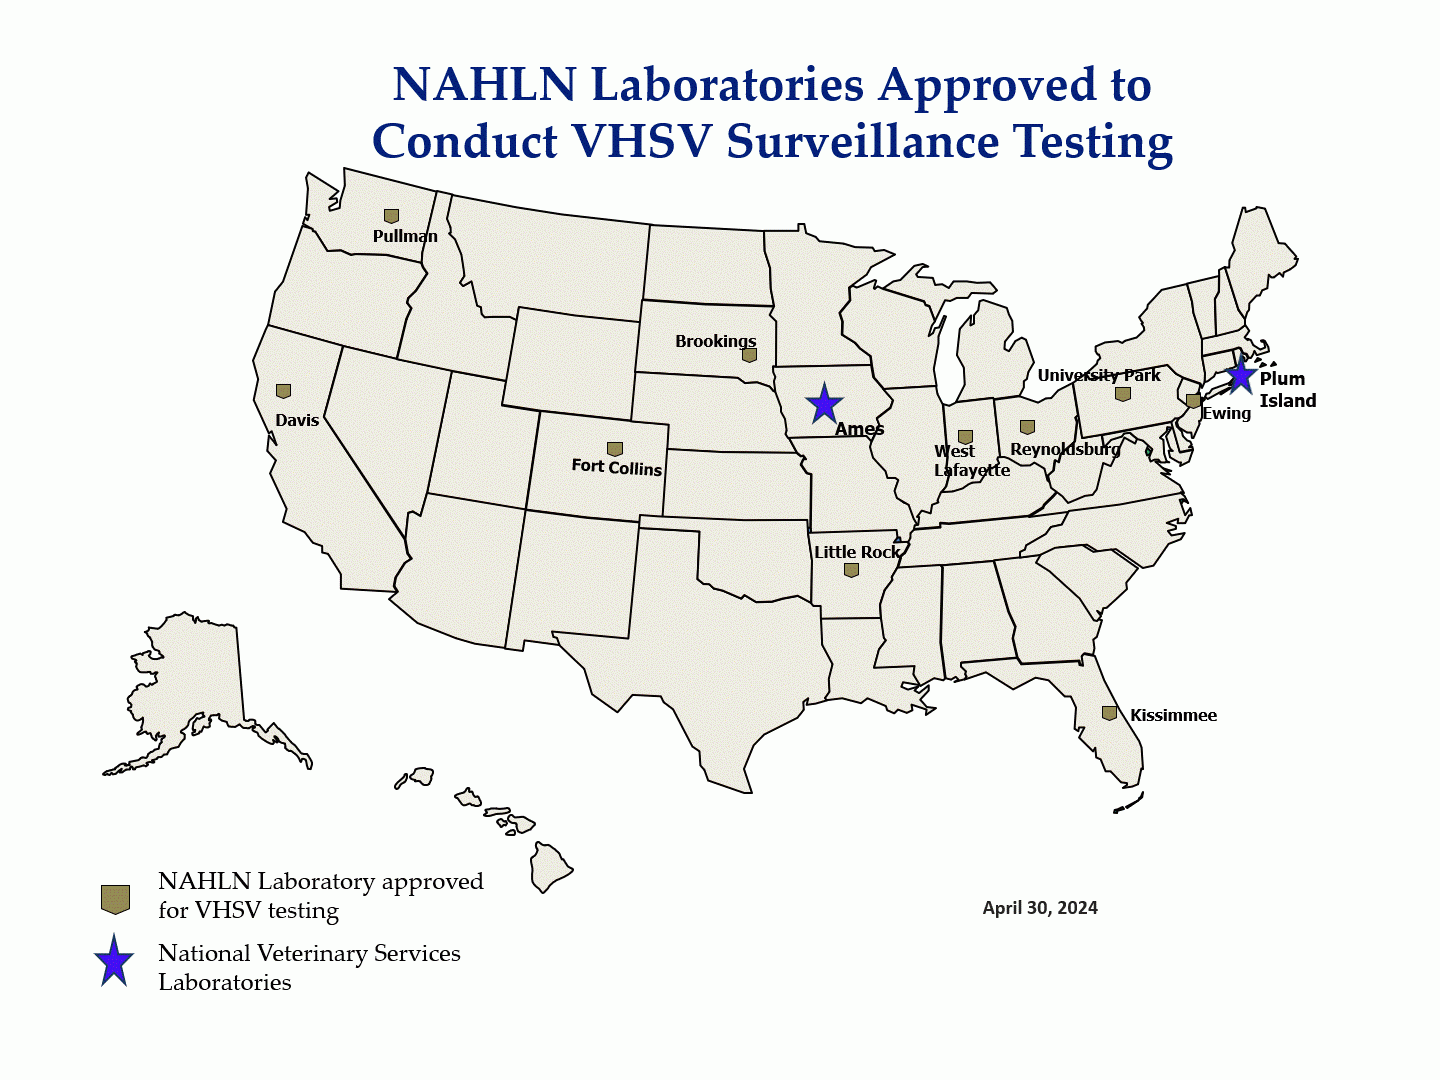 NAHLN Laboratory approved for VHSV Surveillance Testing